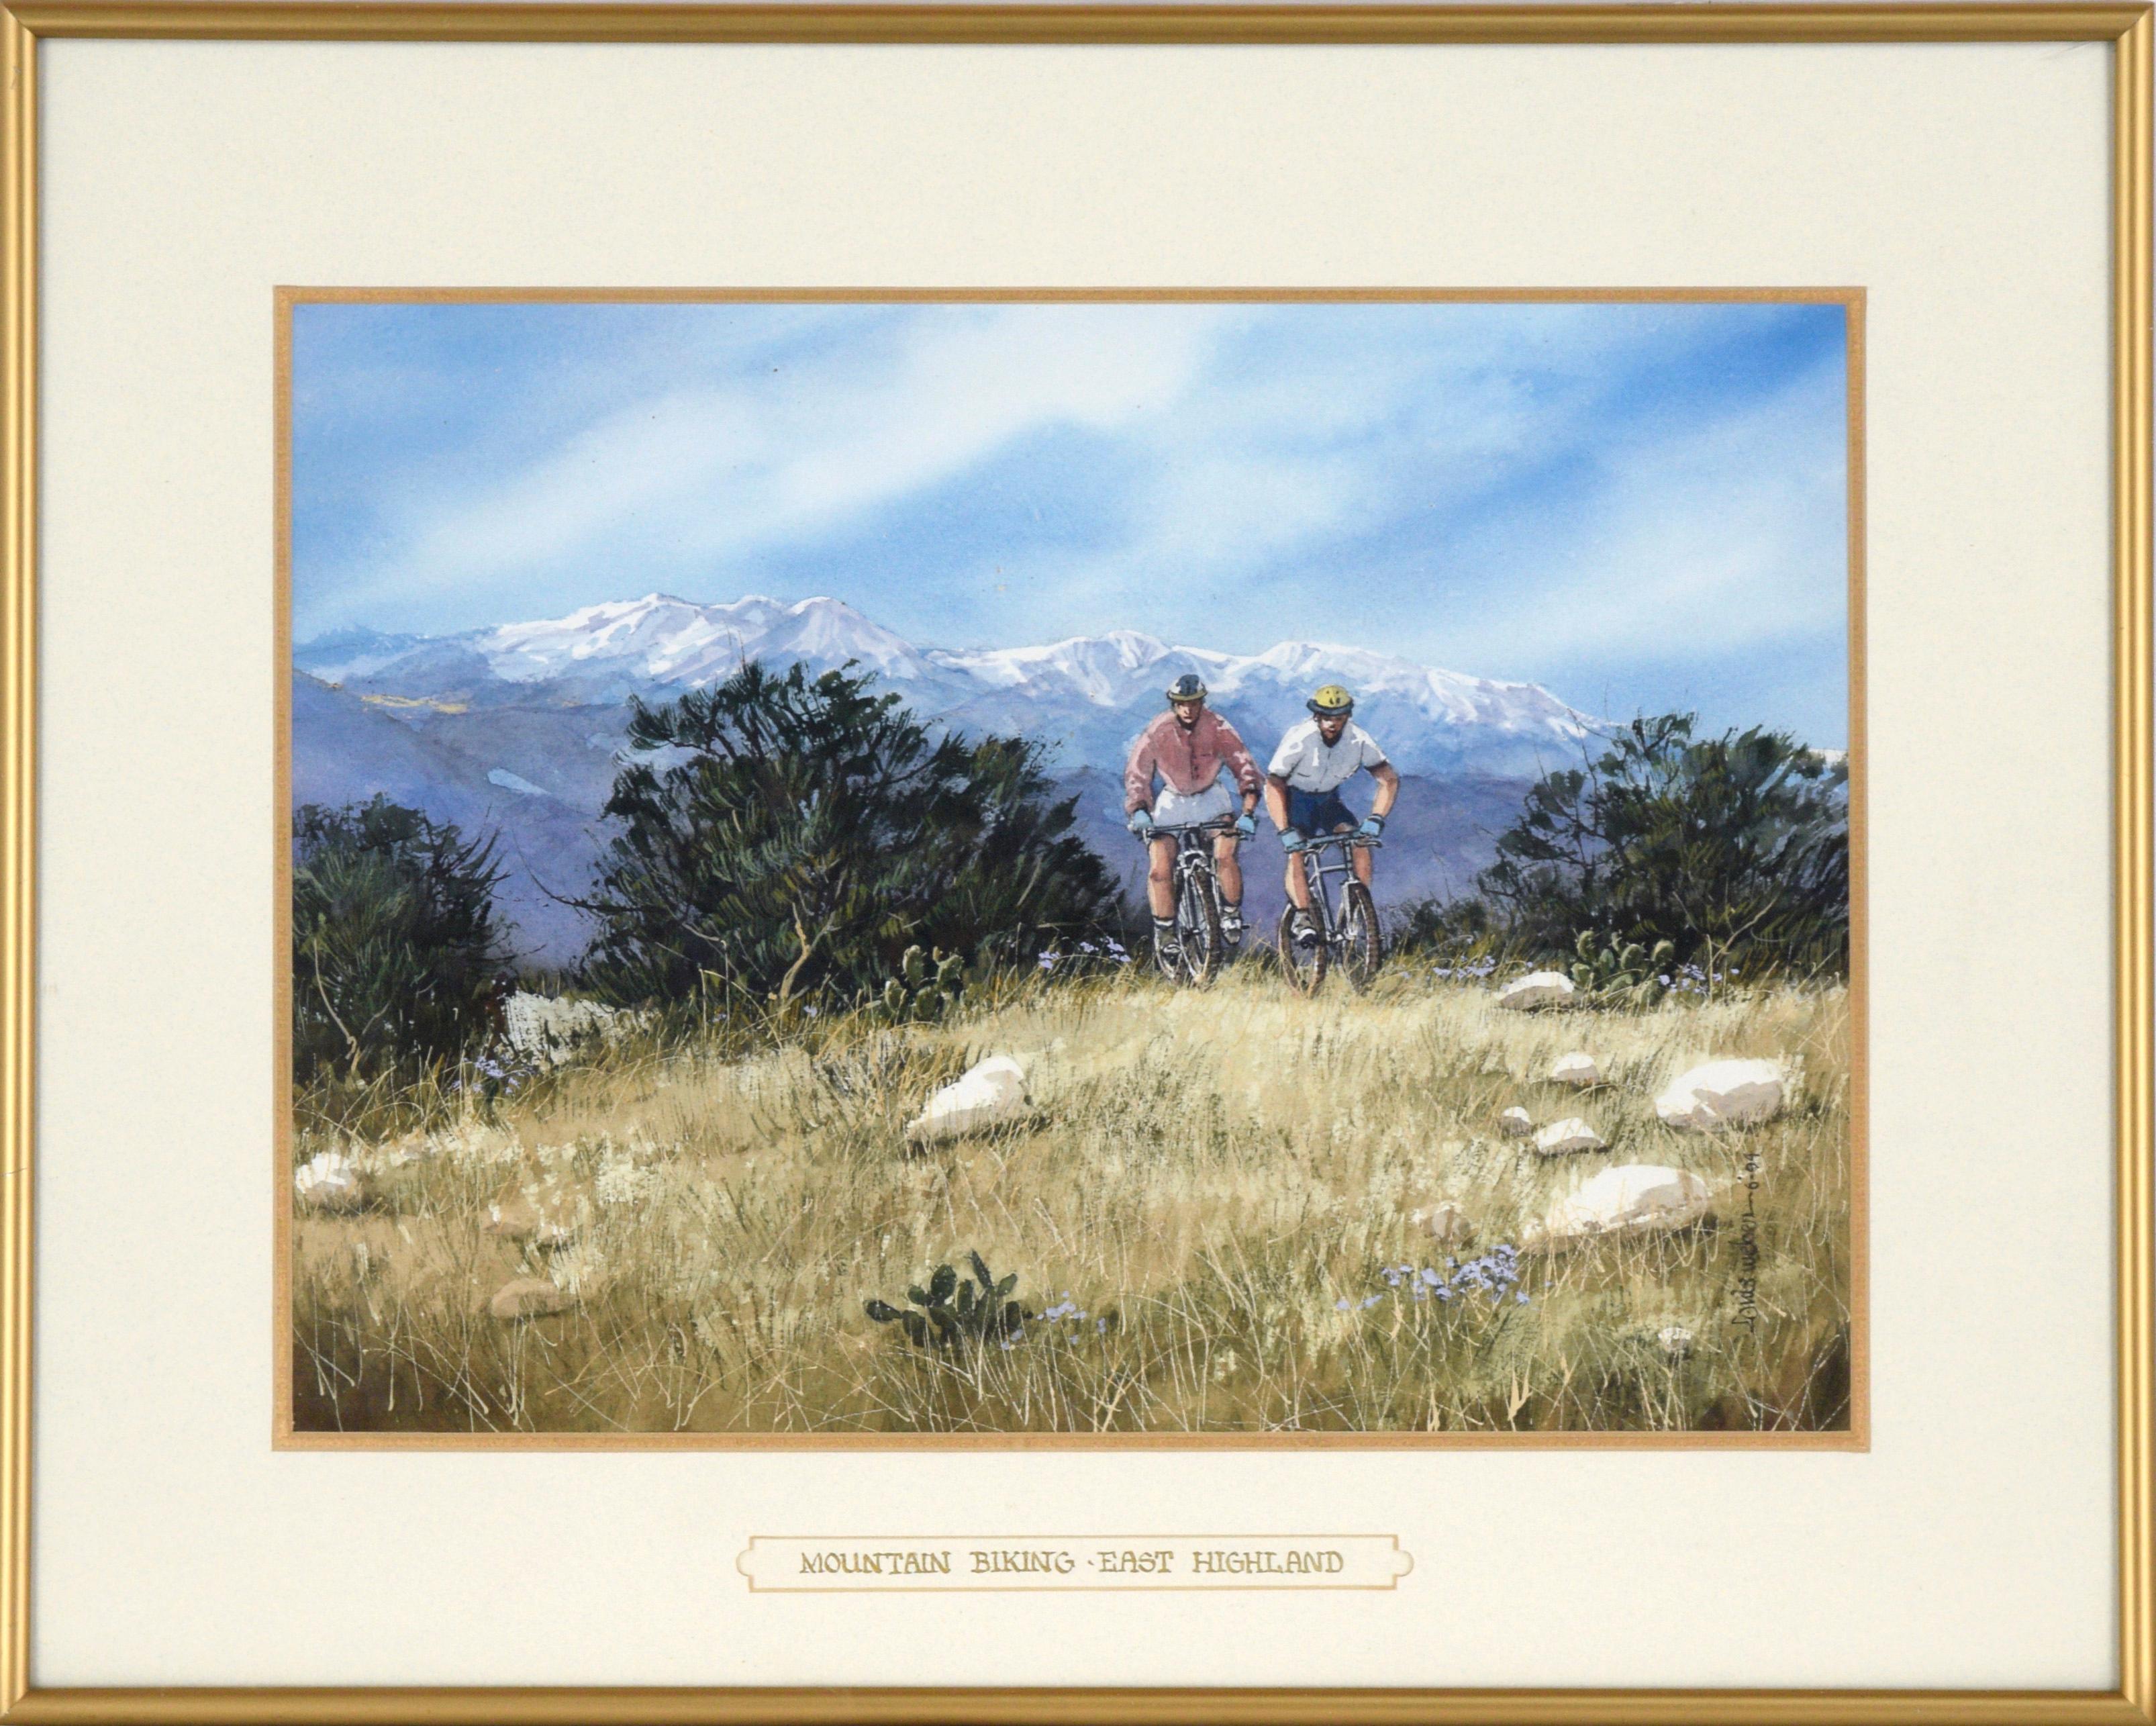 Louis Weber Landscape Art - "Mountain Biking - East Highland" - California Landscape with Mountain Bikers